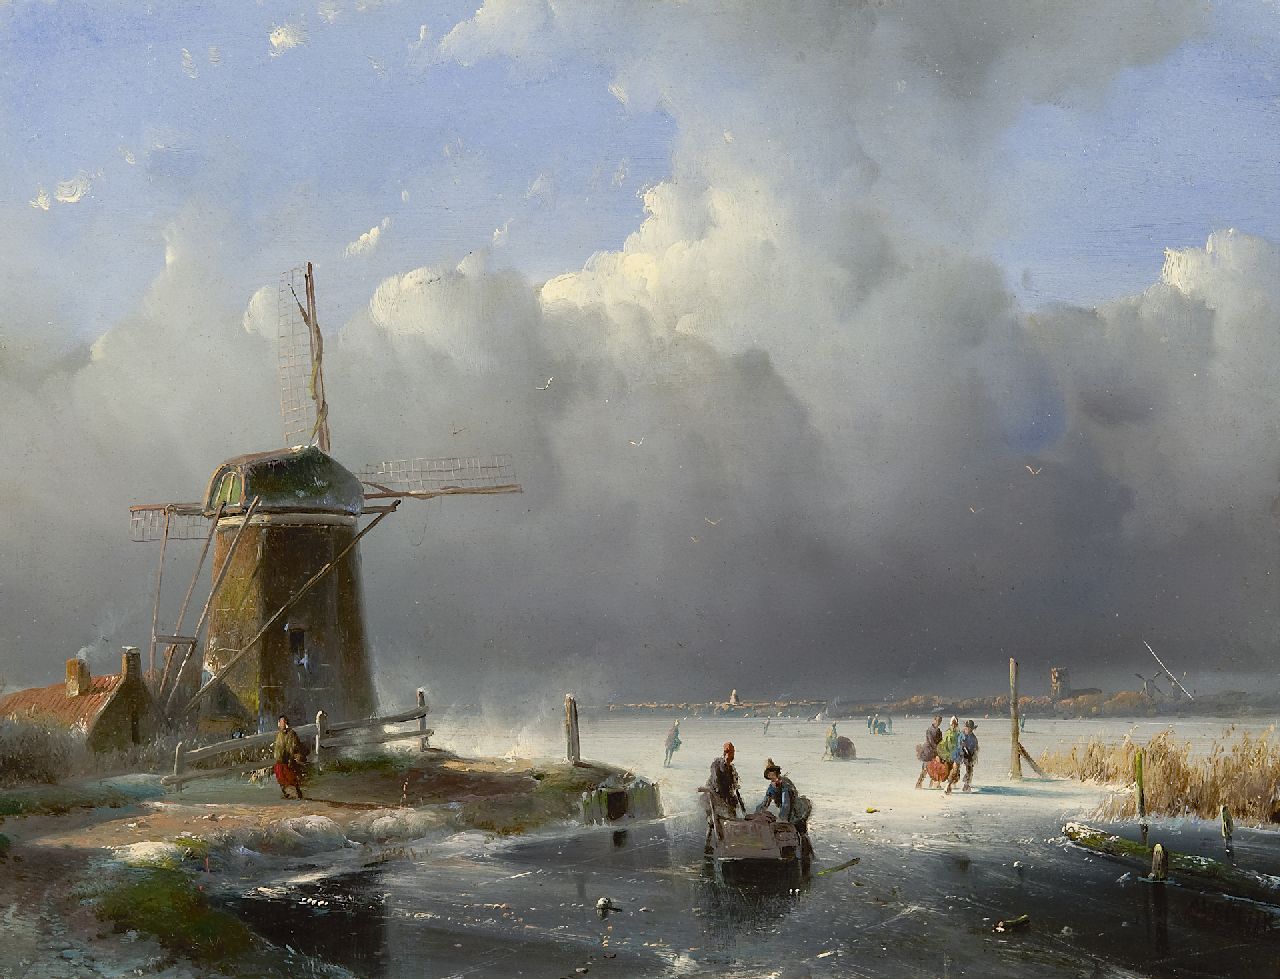 Vrolijk J.A.  | Jacobus 'Adriaan' Vrolijk, A winterlandscape with skaters near a mill, oil on panel 27.1 x 36.0 cm, signed l.r.